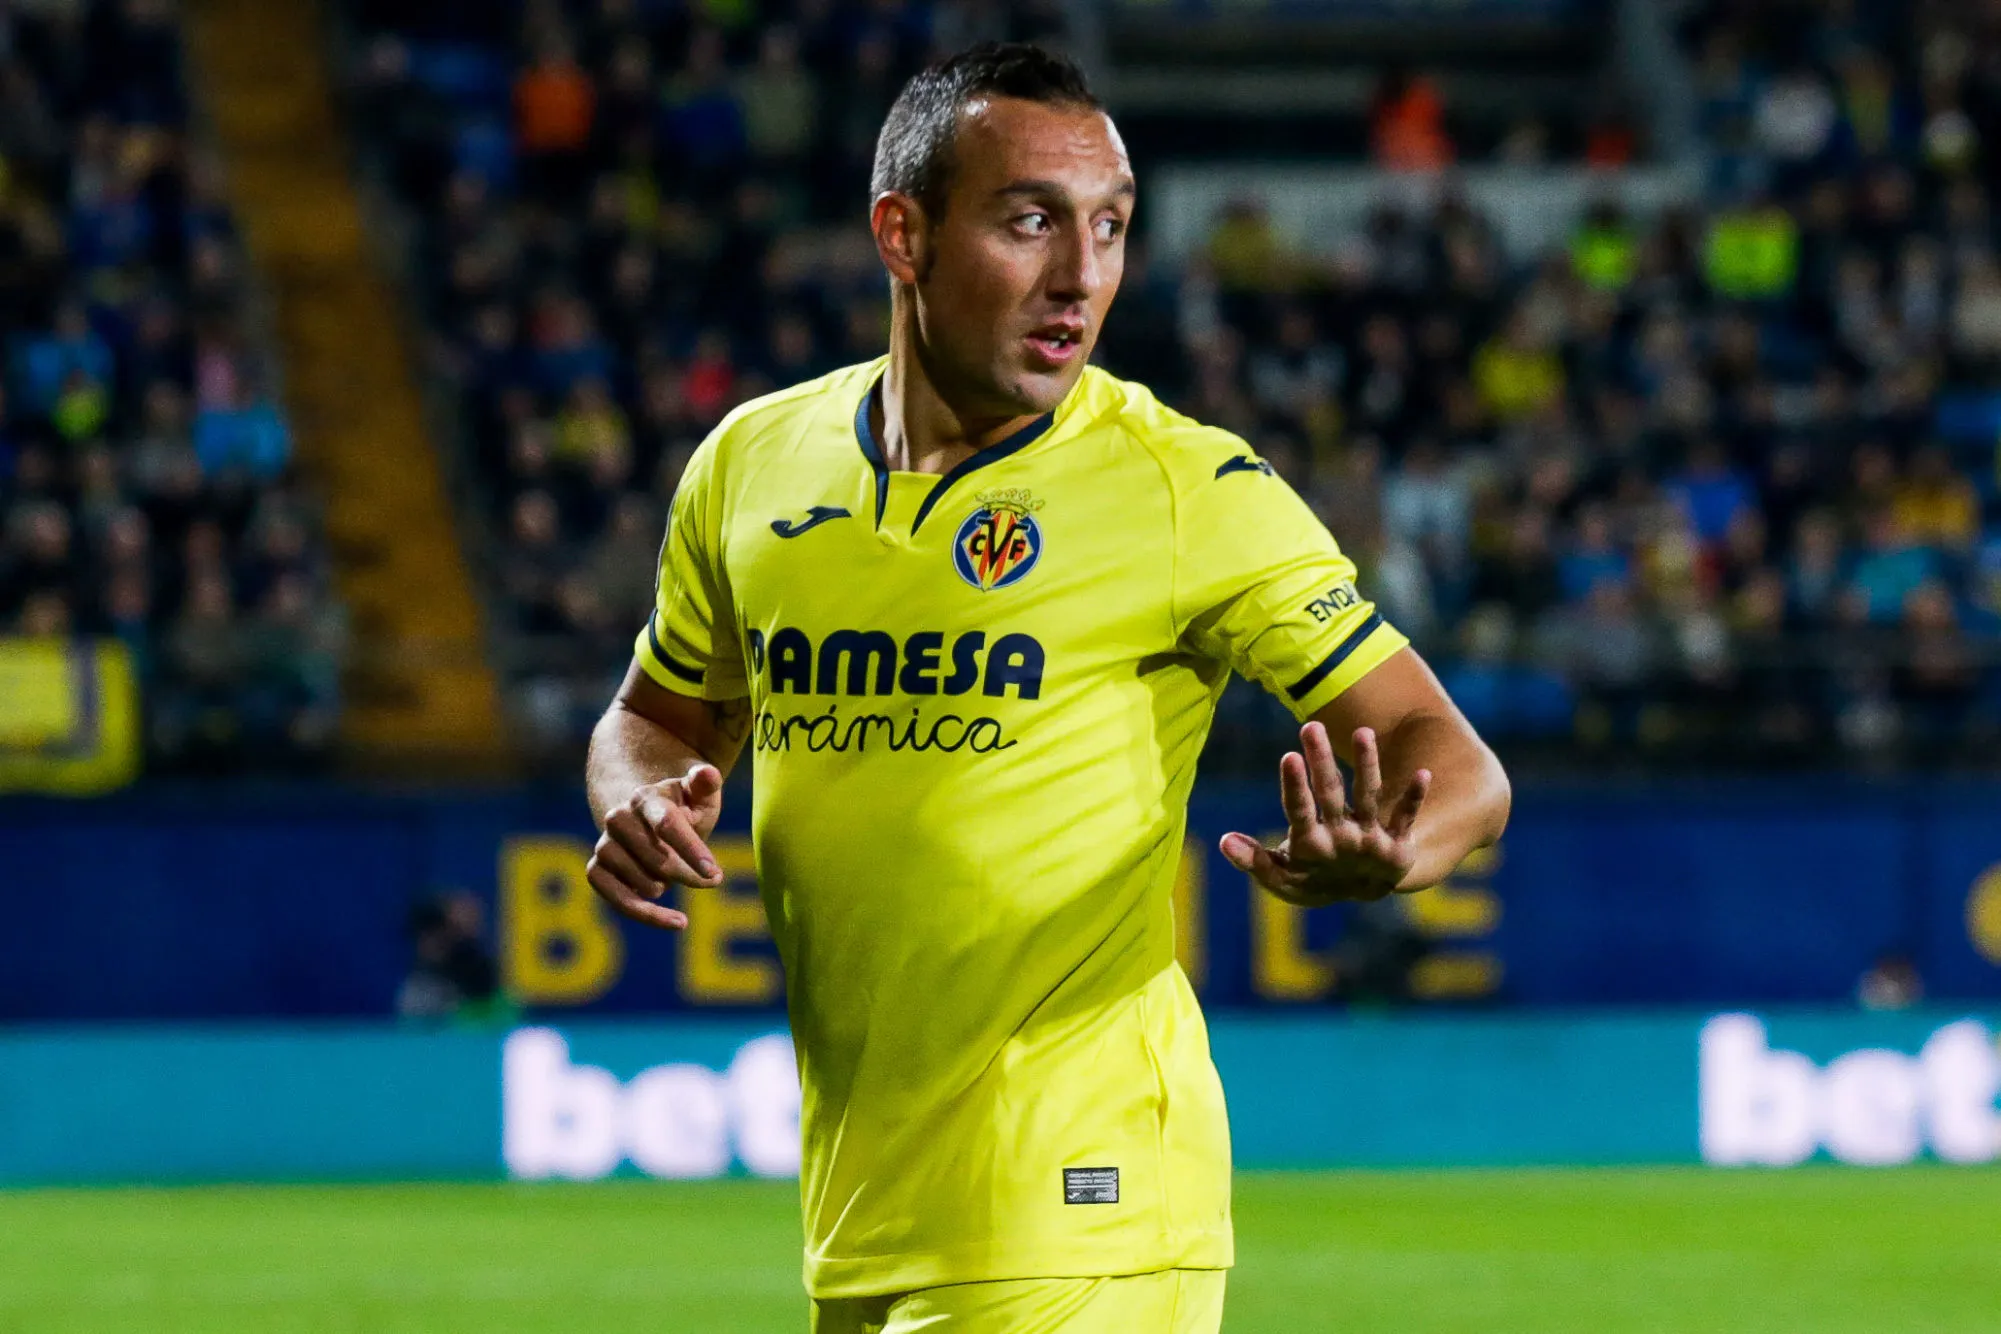 Pronostic Grenade Villarreal : Analyse, prono et cotes du match de Liga